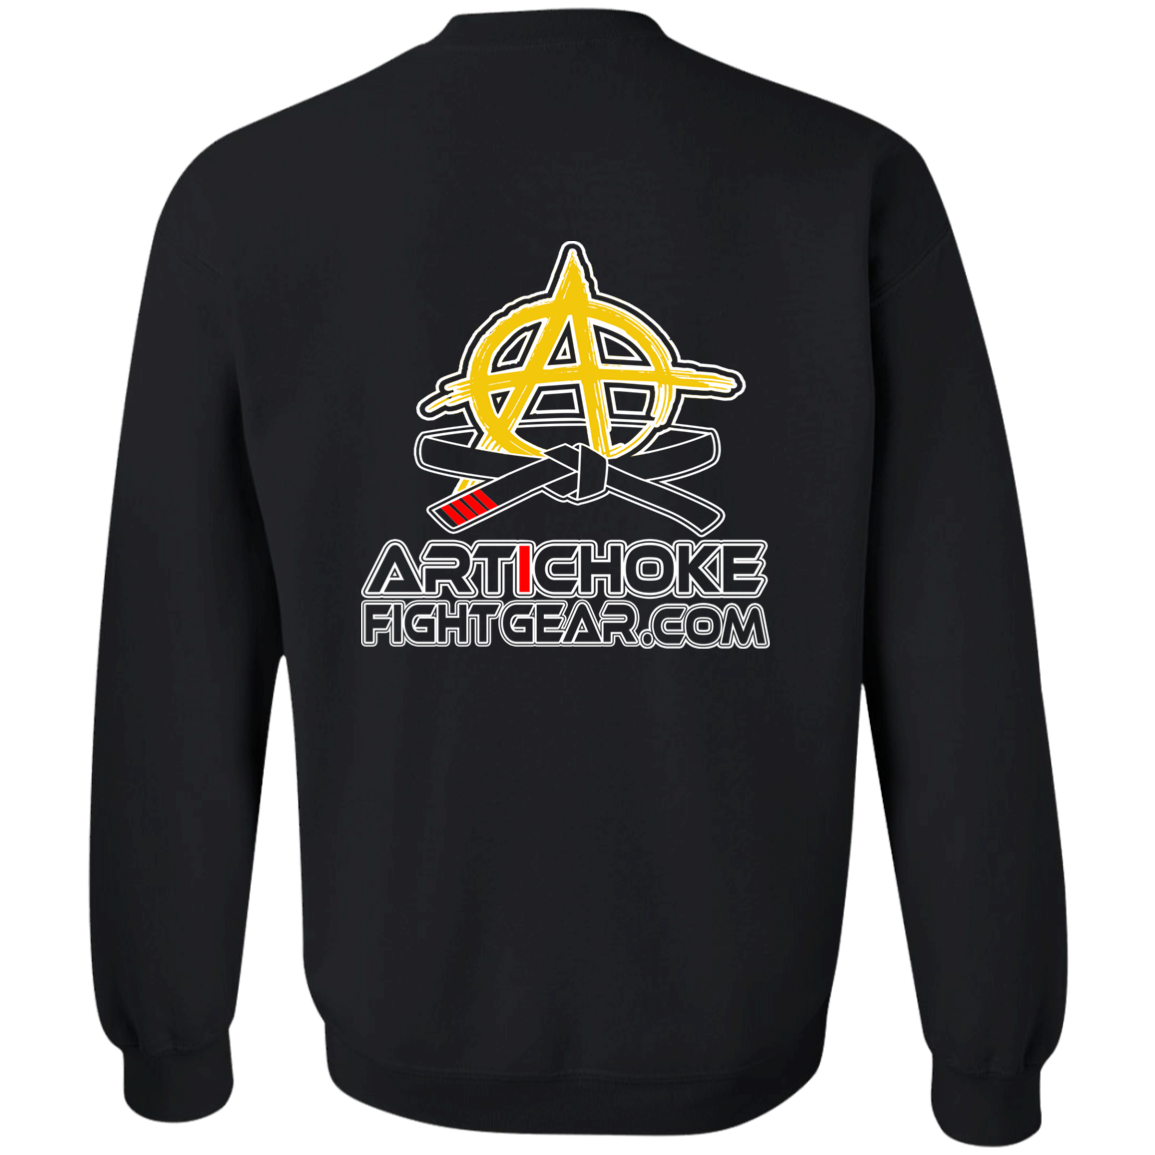 Artichoke Fight Gear Custom Design #2. USE ARMBARS. Crewneck Pullover Sweatshirt